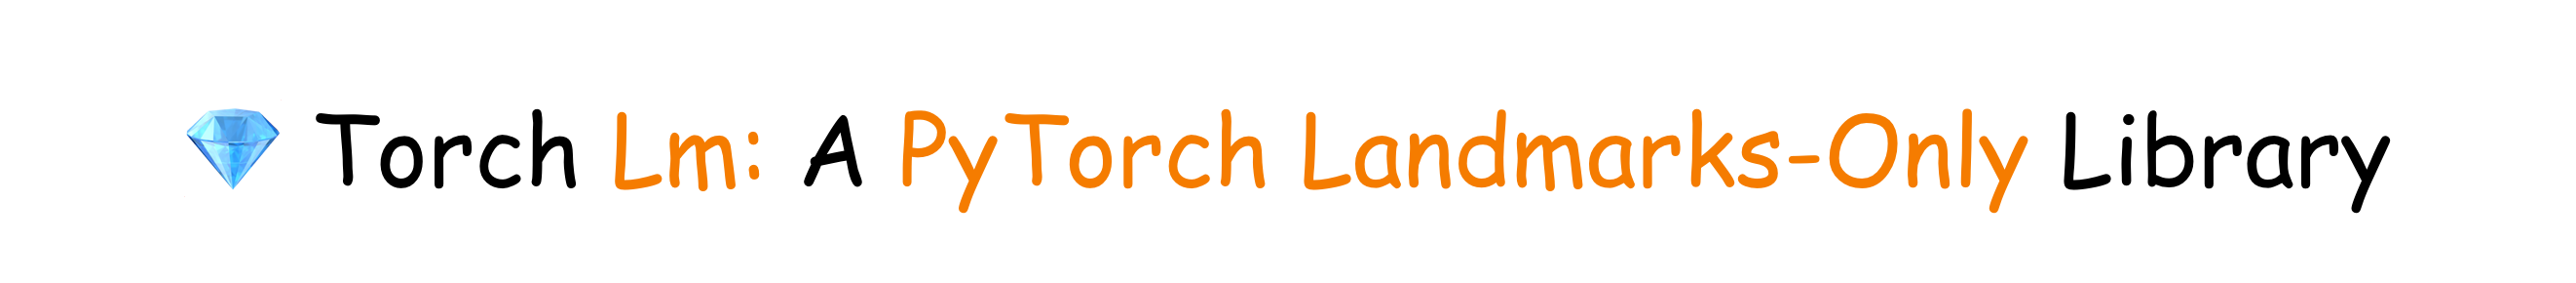 torchlm-logo